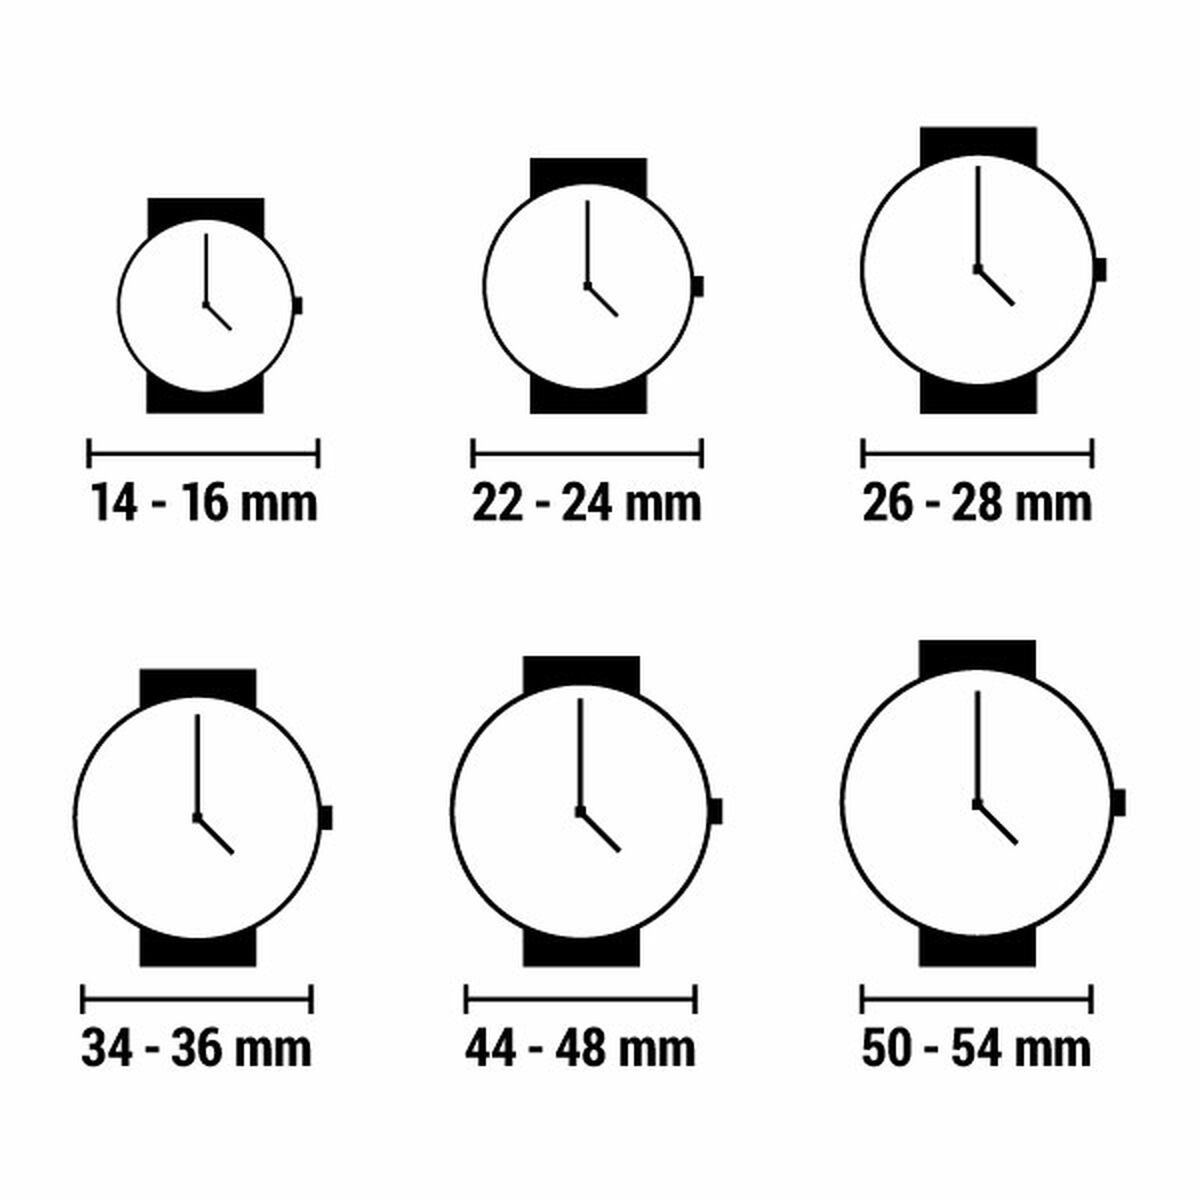 Horloge Dames Olivia Burton OB16US58 (Ø 34 mm)